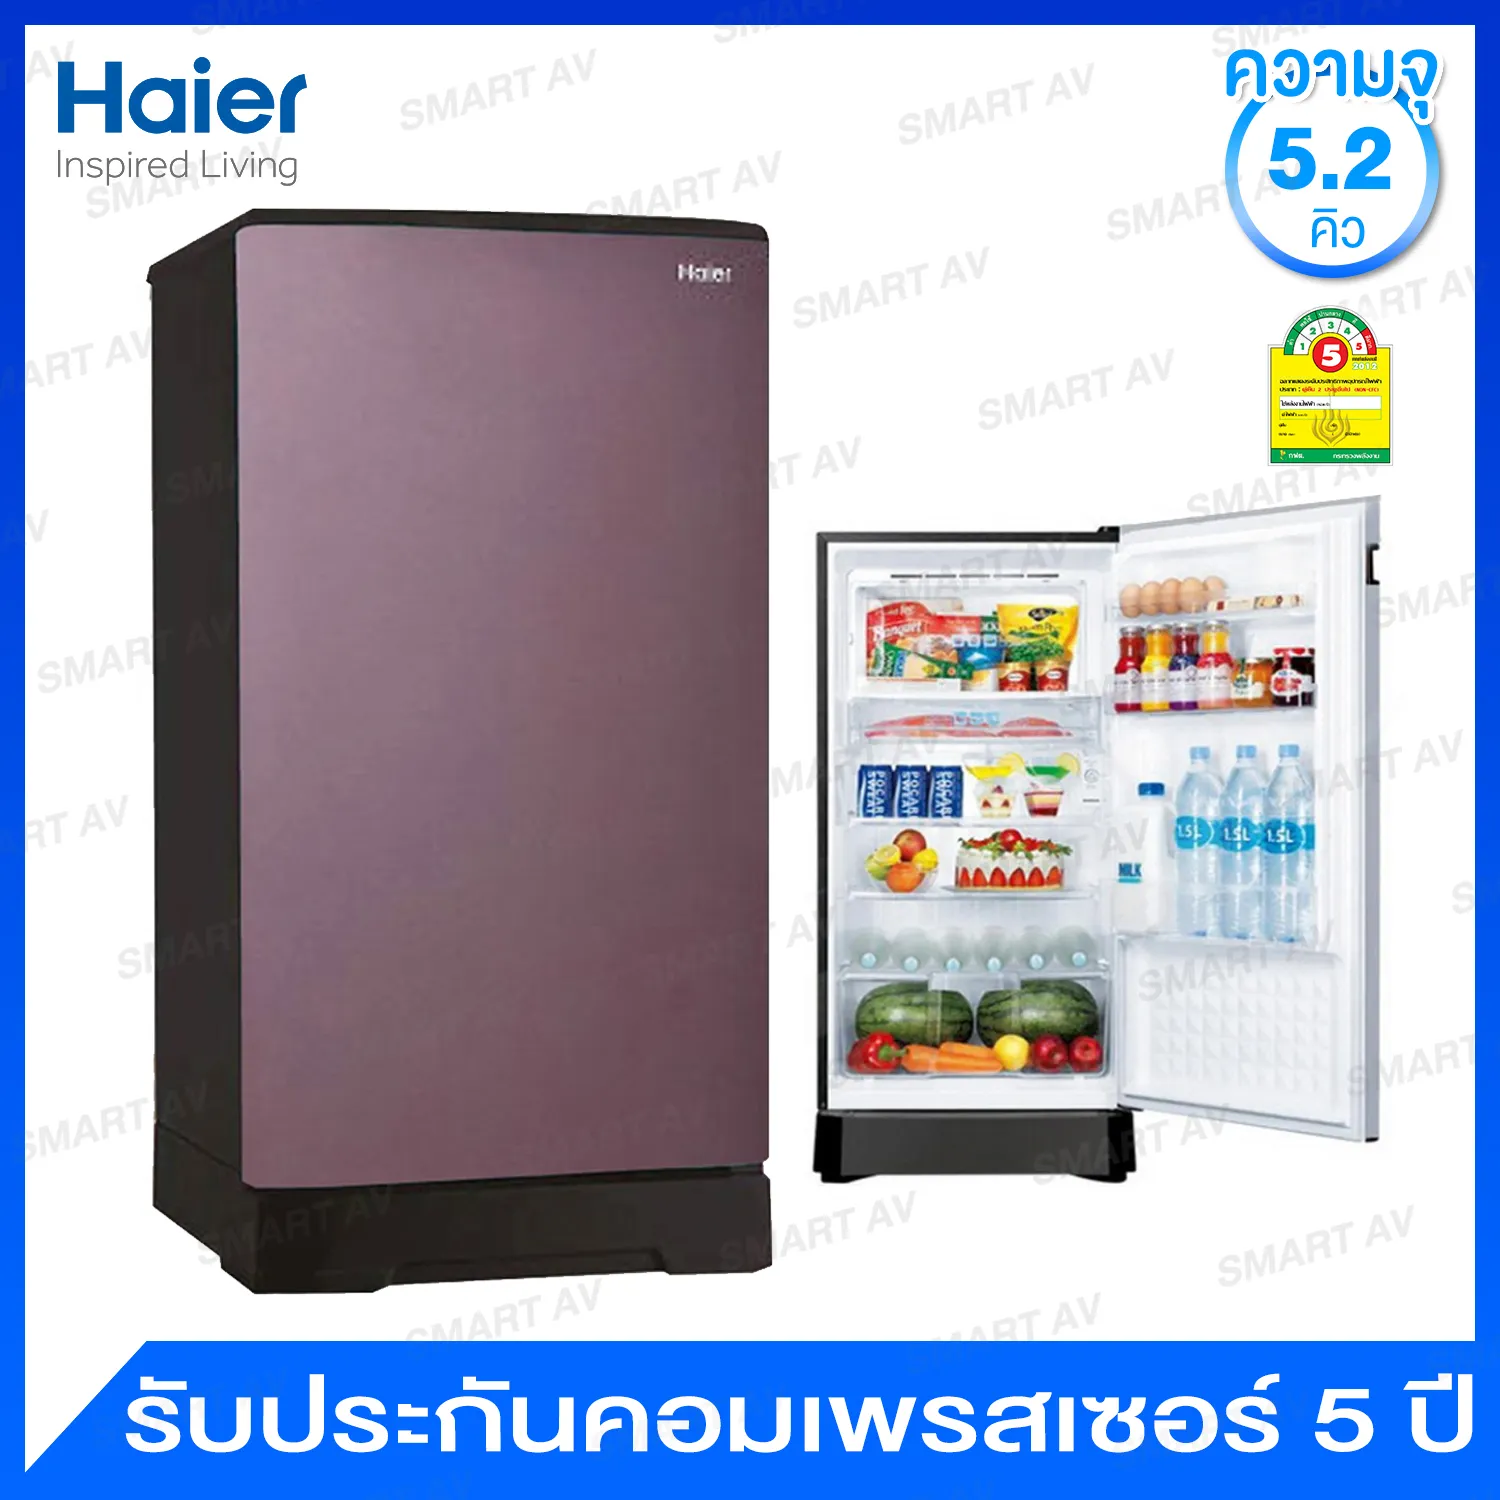 Haier ตู้เย็น 1 ประตู ความจุ 5.2 คิว รุ่น HR-ADBX15-CC (สีช็อกโกแลต)